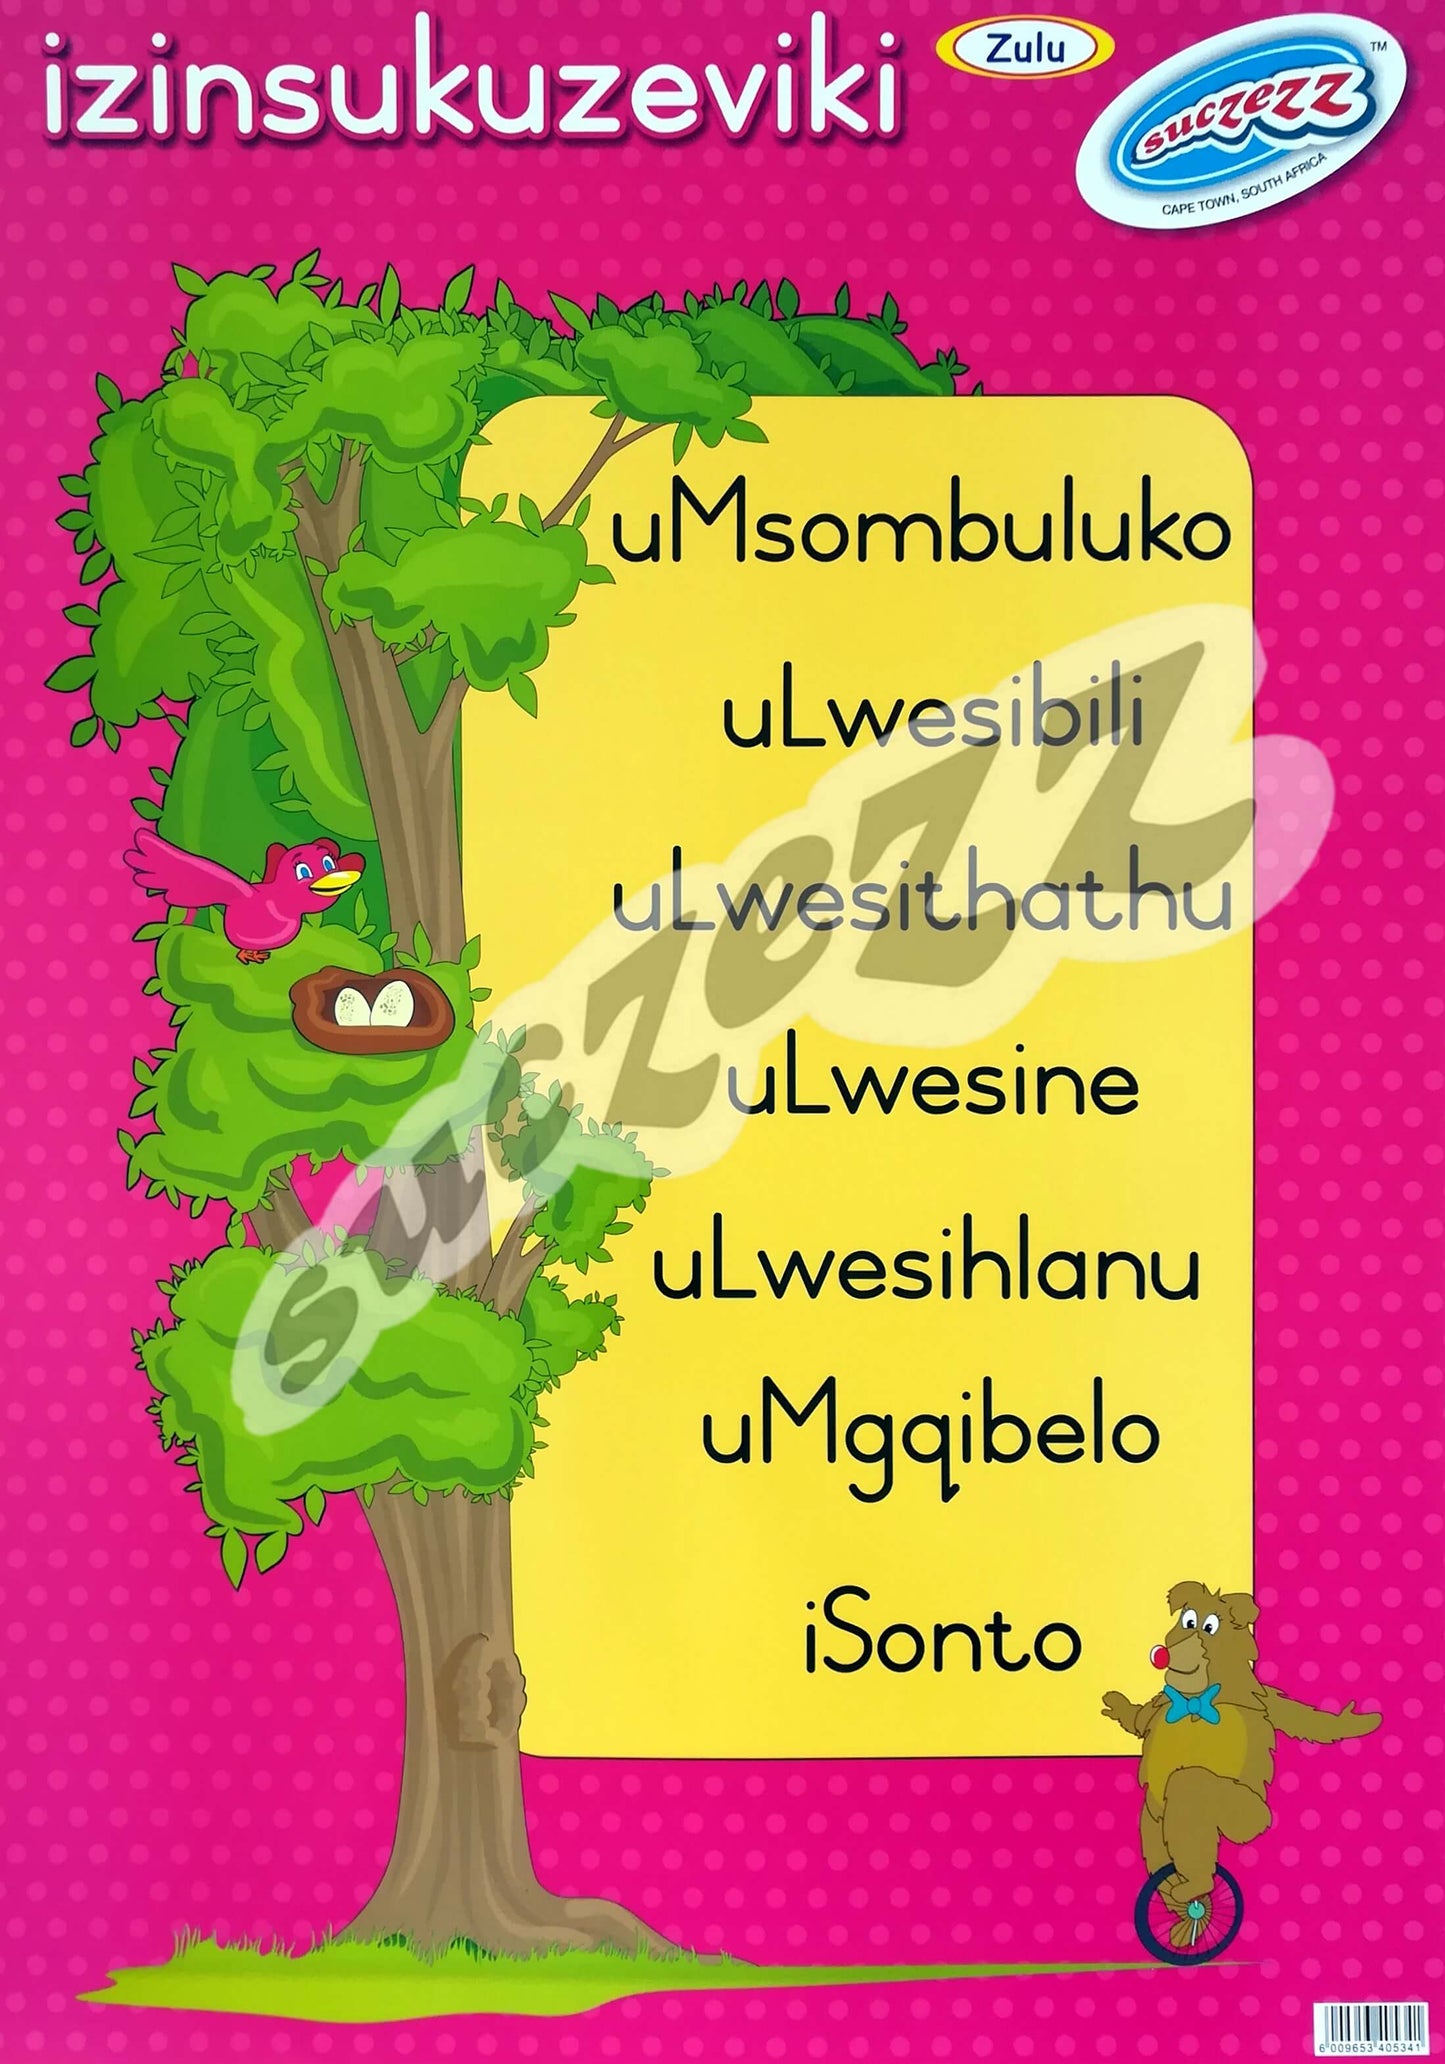 Poster - Izinsukuzeviki (Days of the week) - Zulu